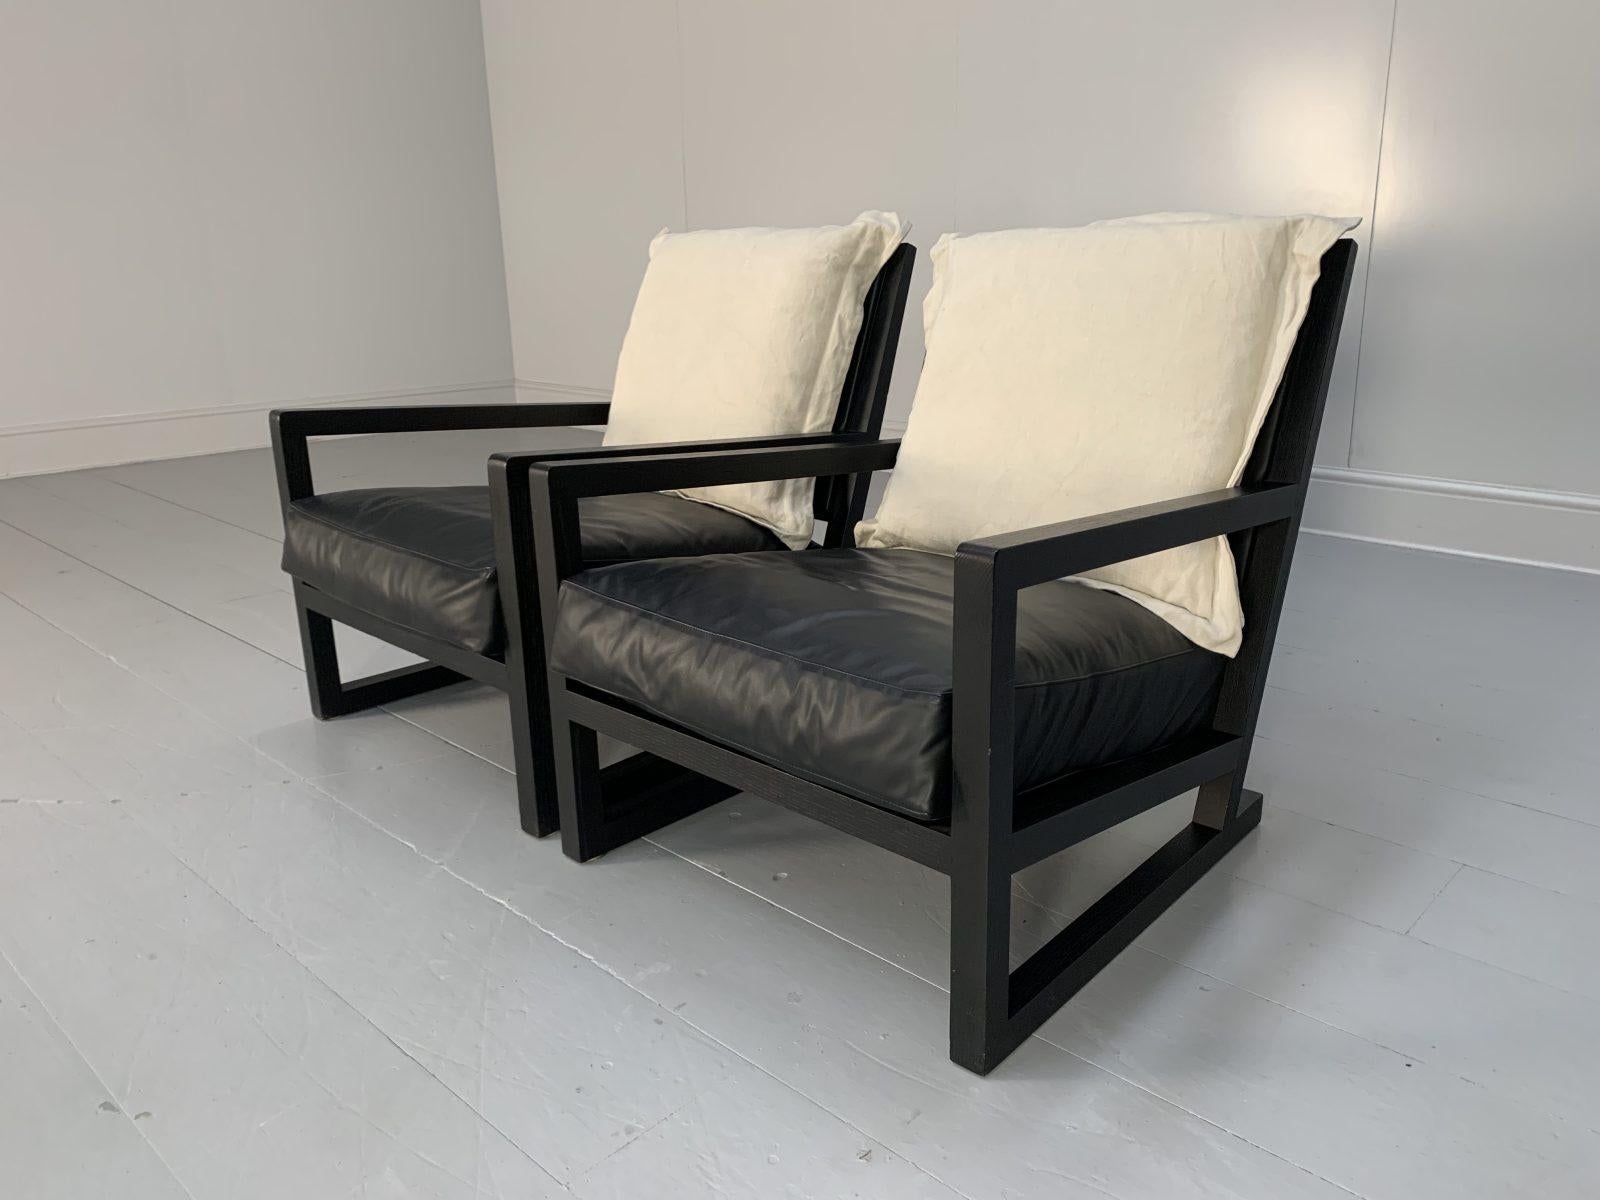 B&B Italia “Maxalto Clio” Armchairs, in Black Leather & Linen X4 In Good Condition For Sale In Barrowford, GB